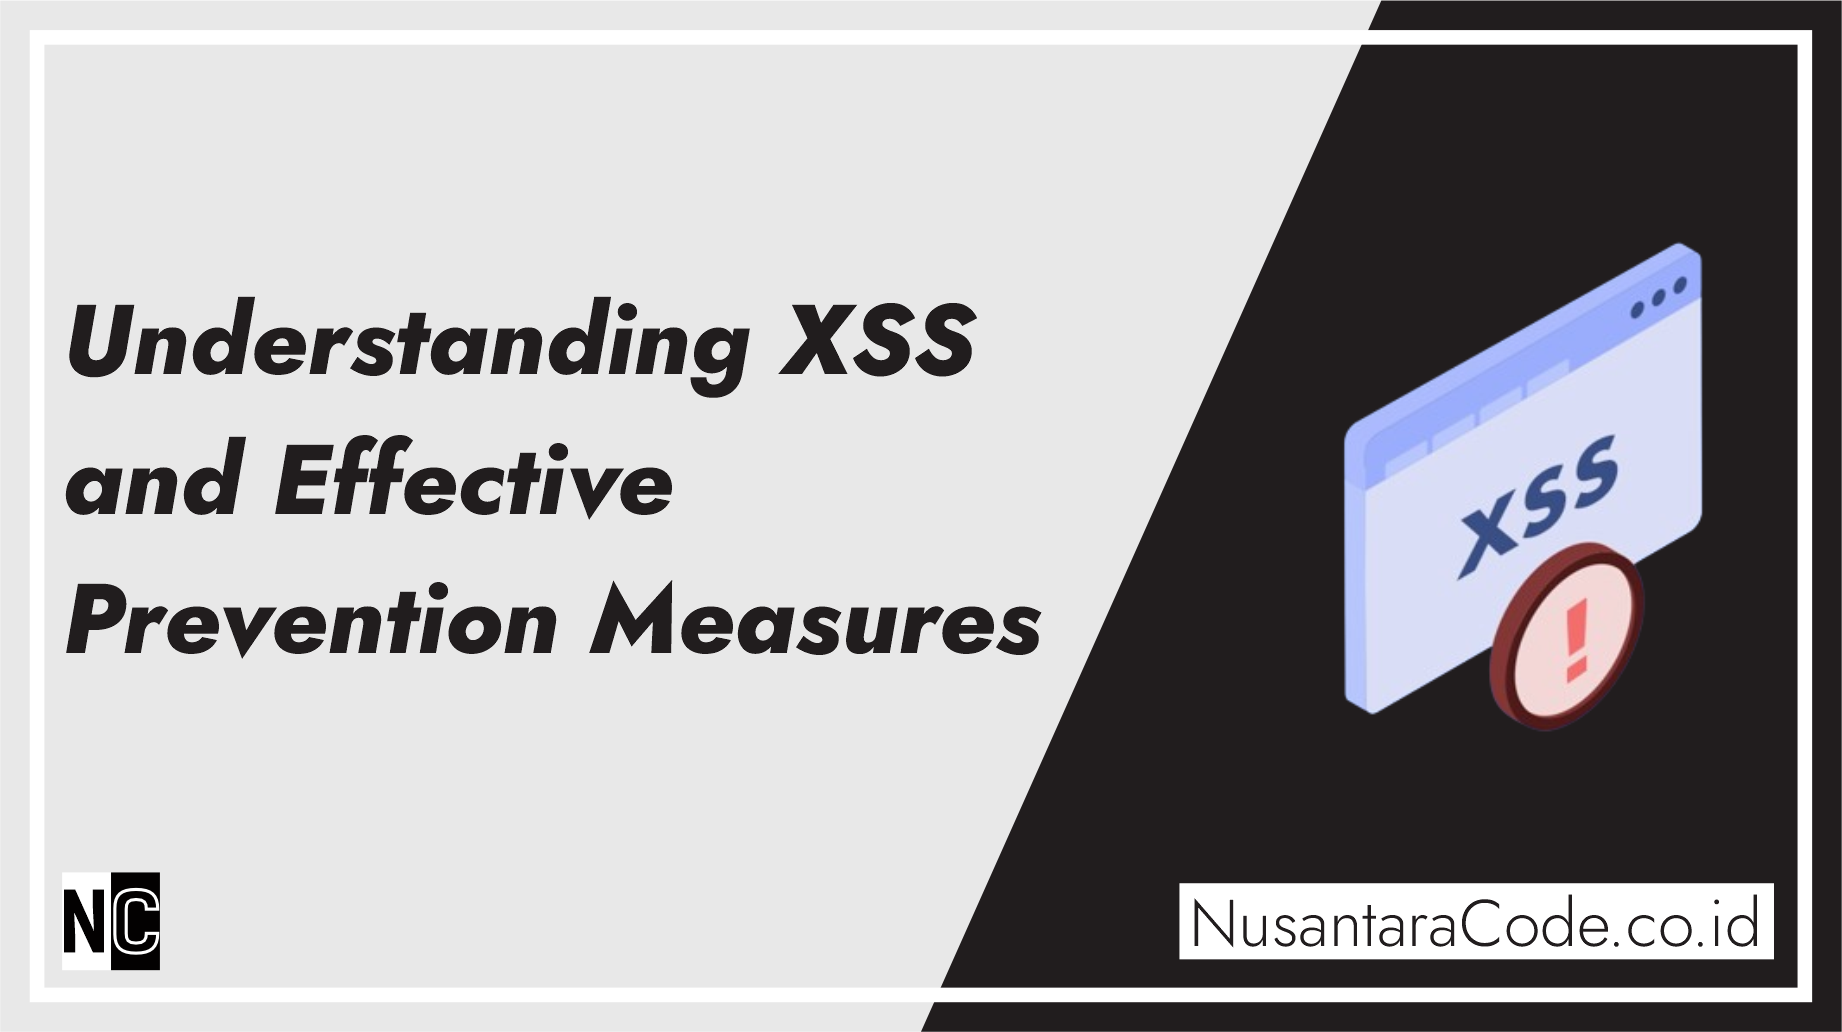 Understanding XSS (Cross-Site Scripting) and Effective Prevention Measures